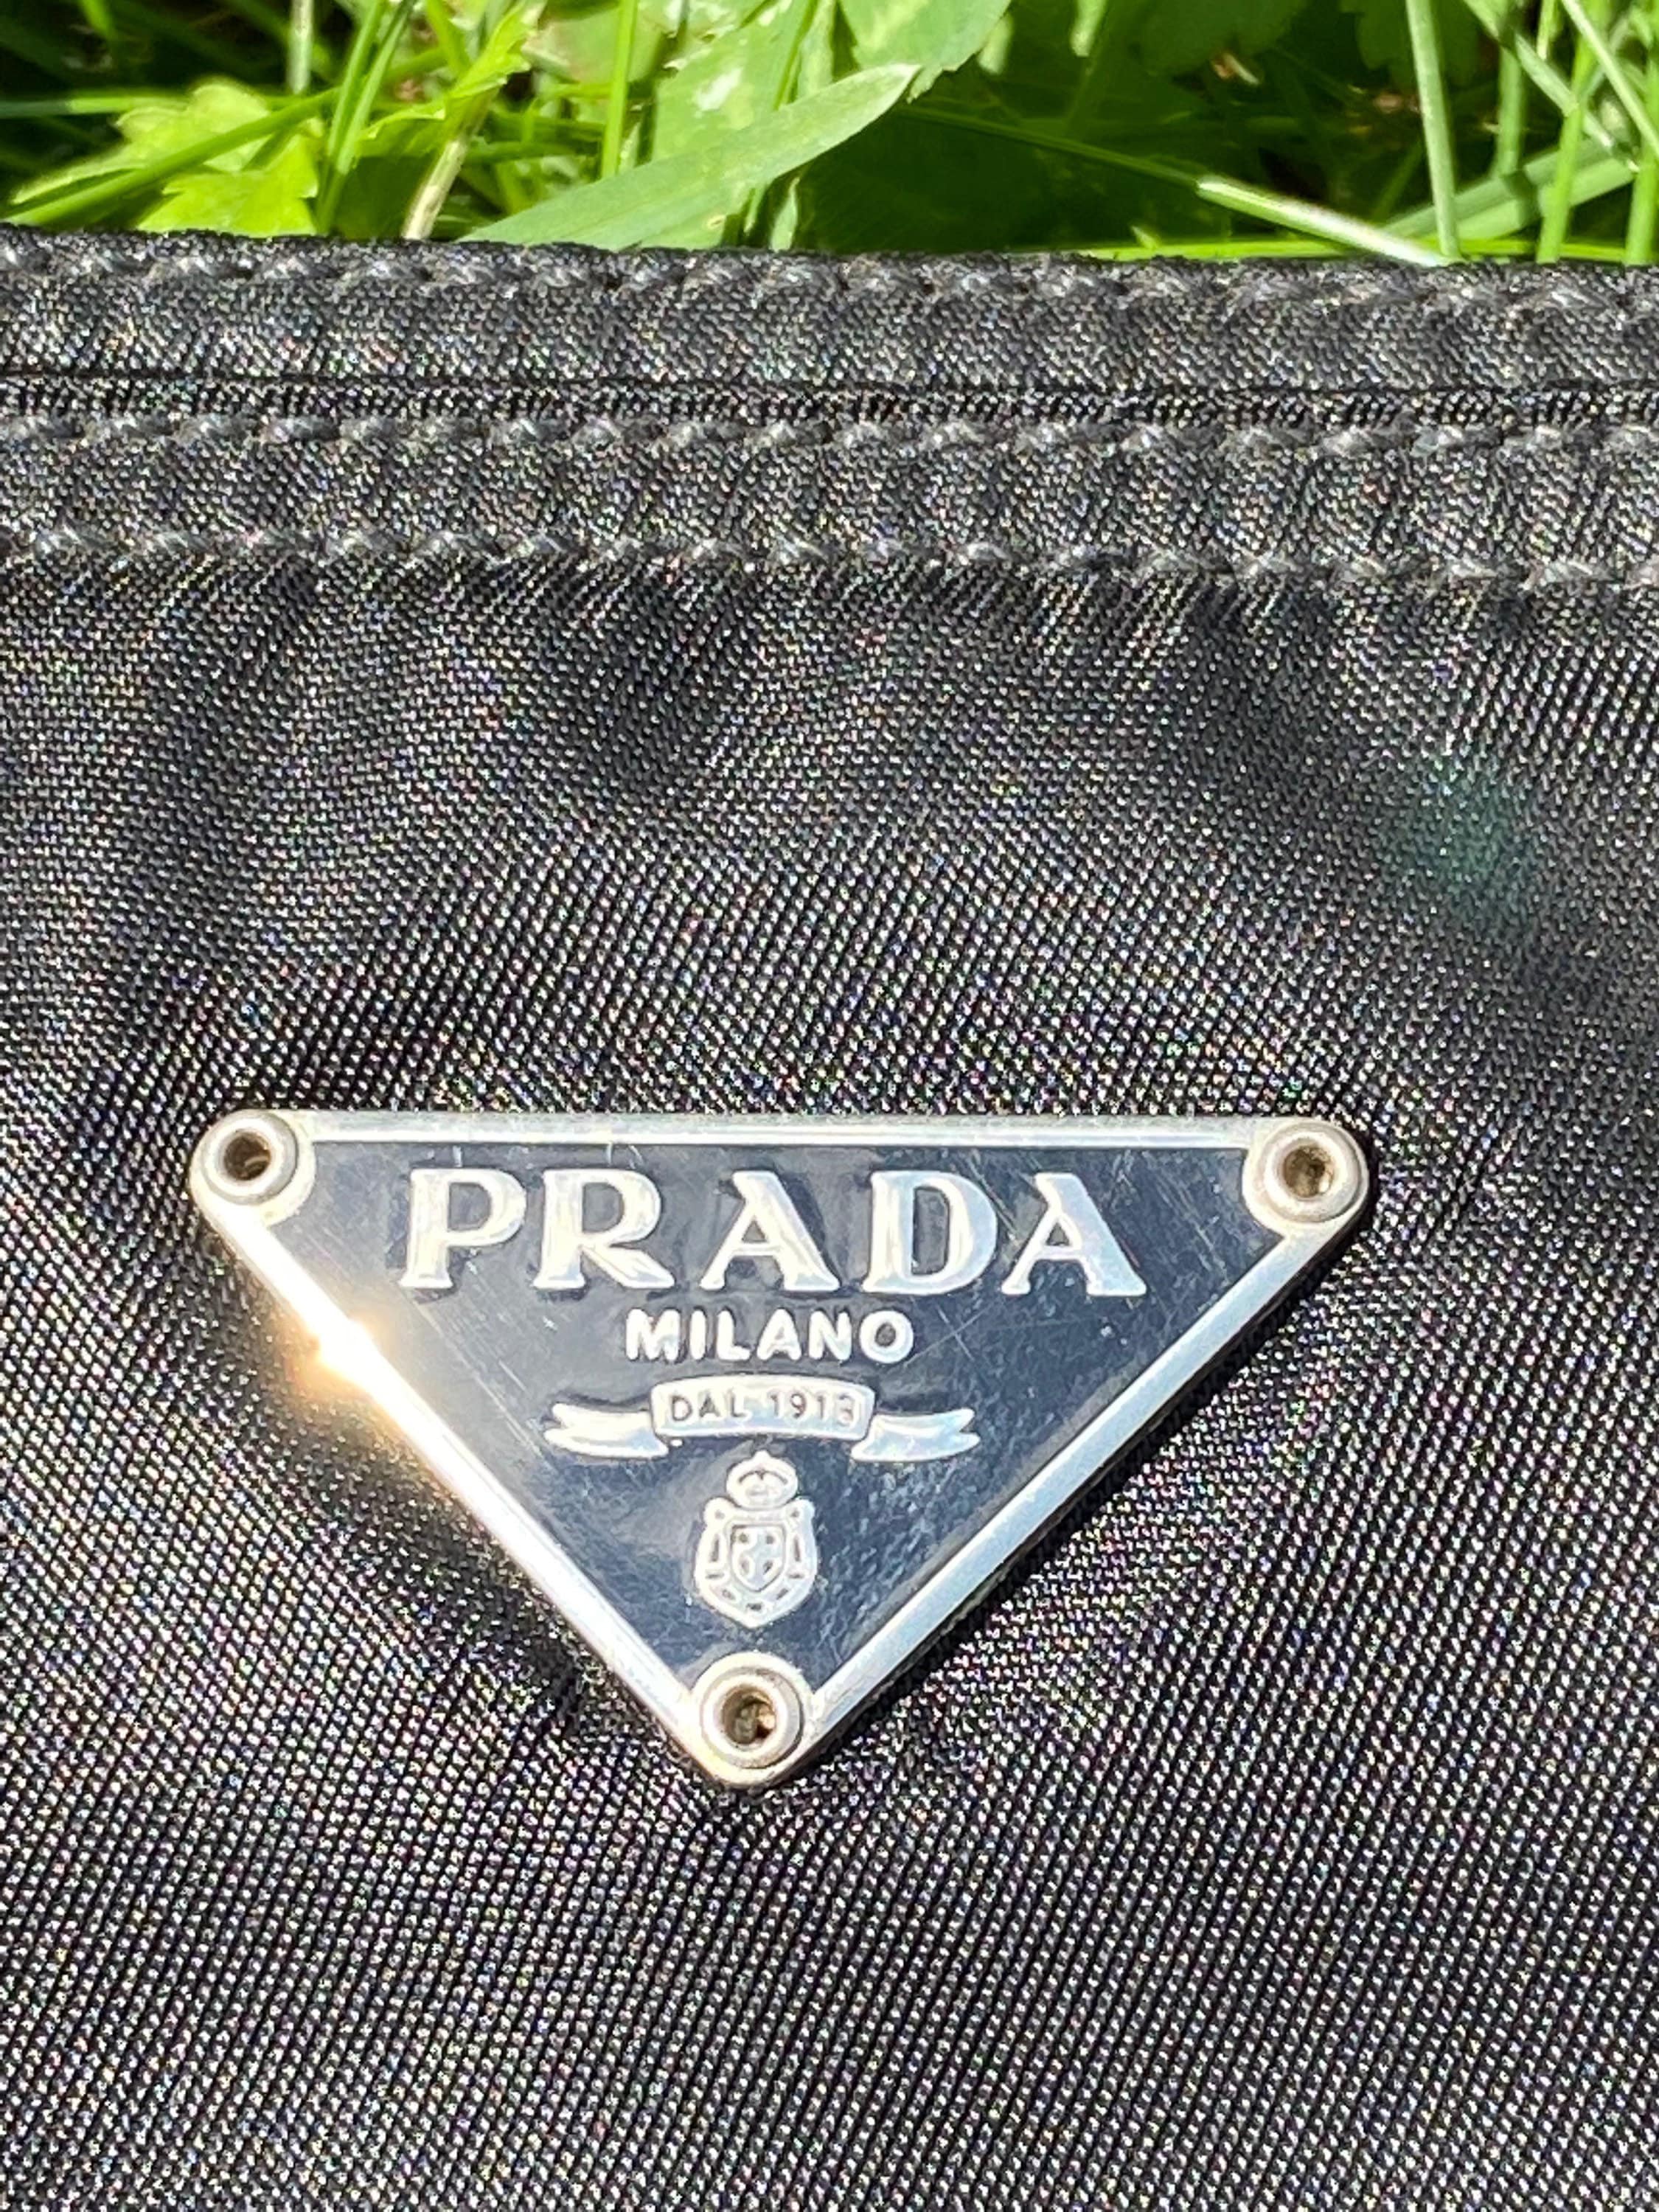 PRADA red nylon pochette with leather strap – Vintage Carwen